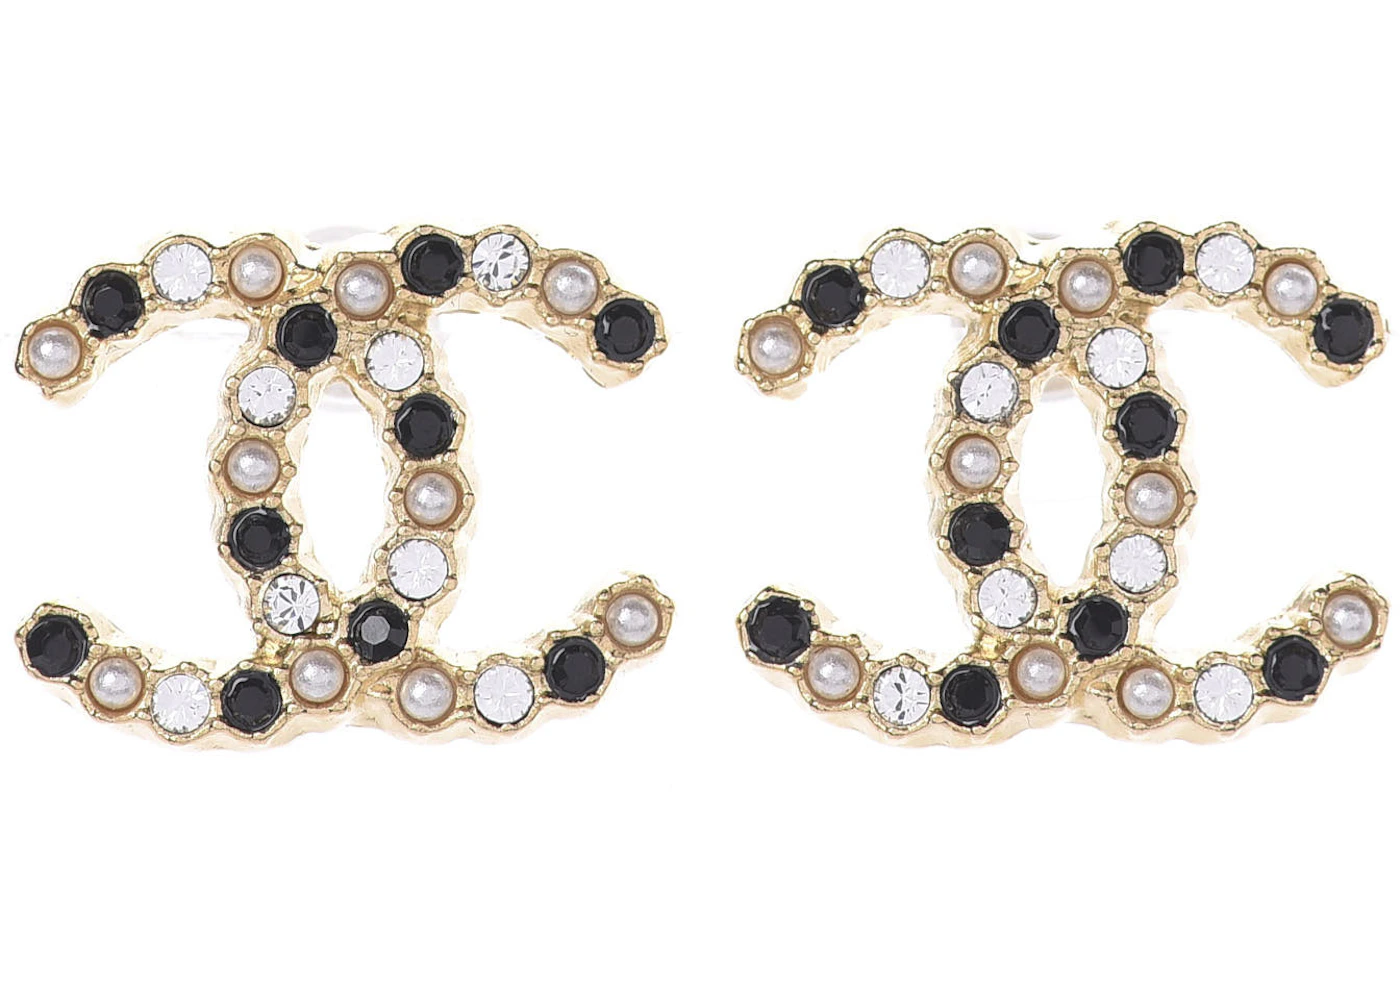 cc pearl earrings